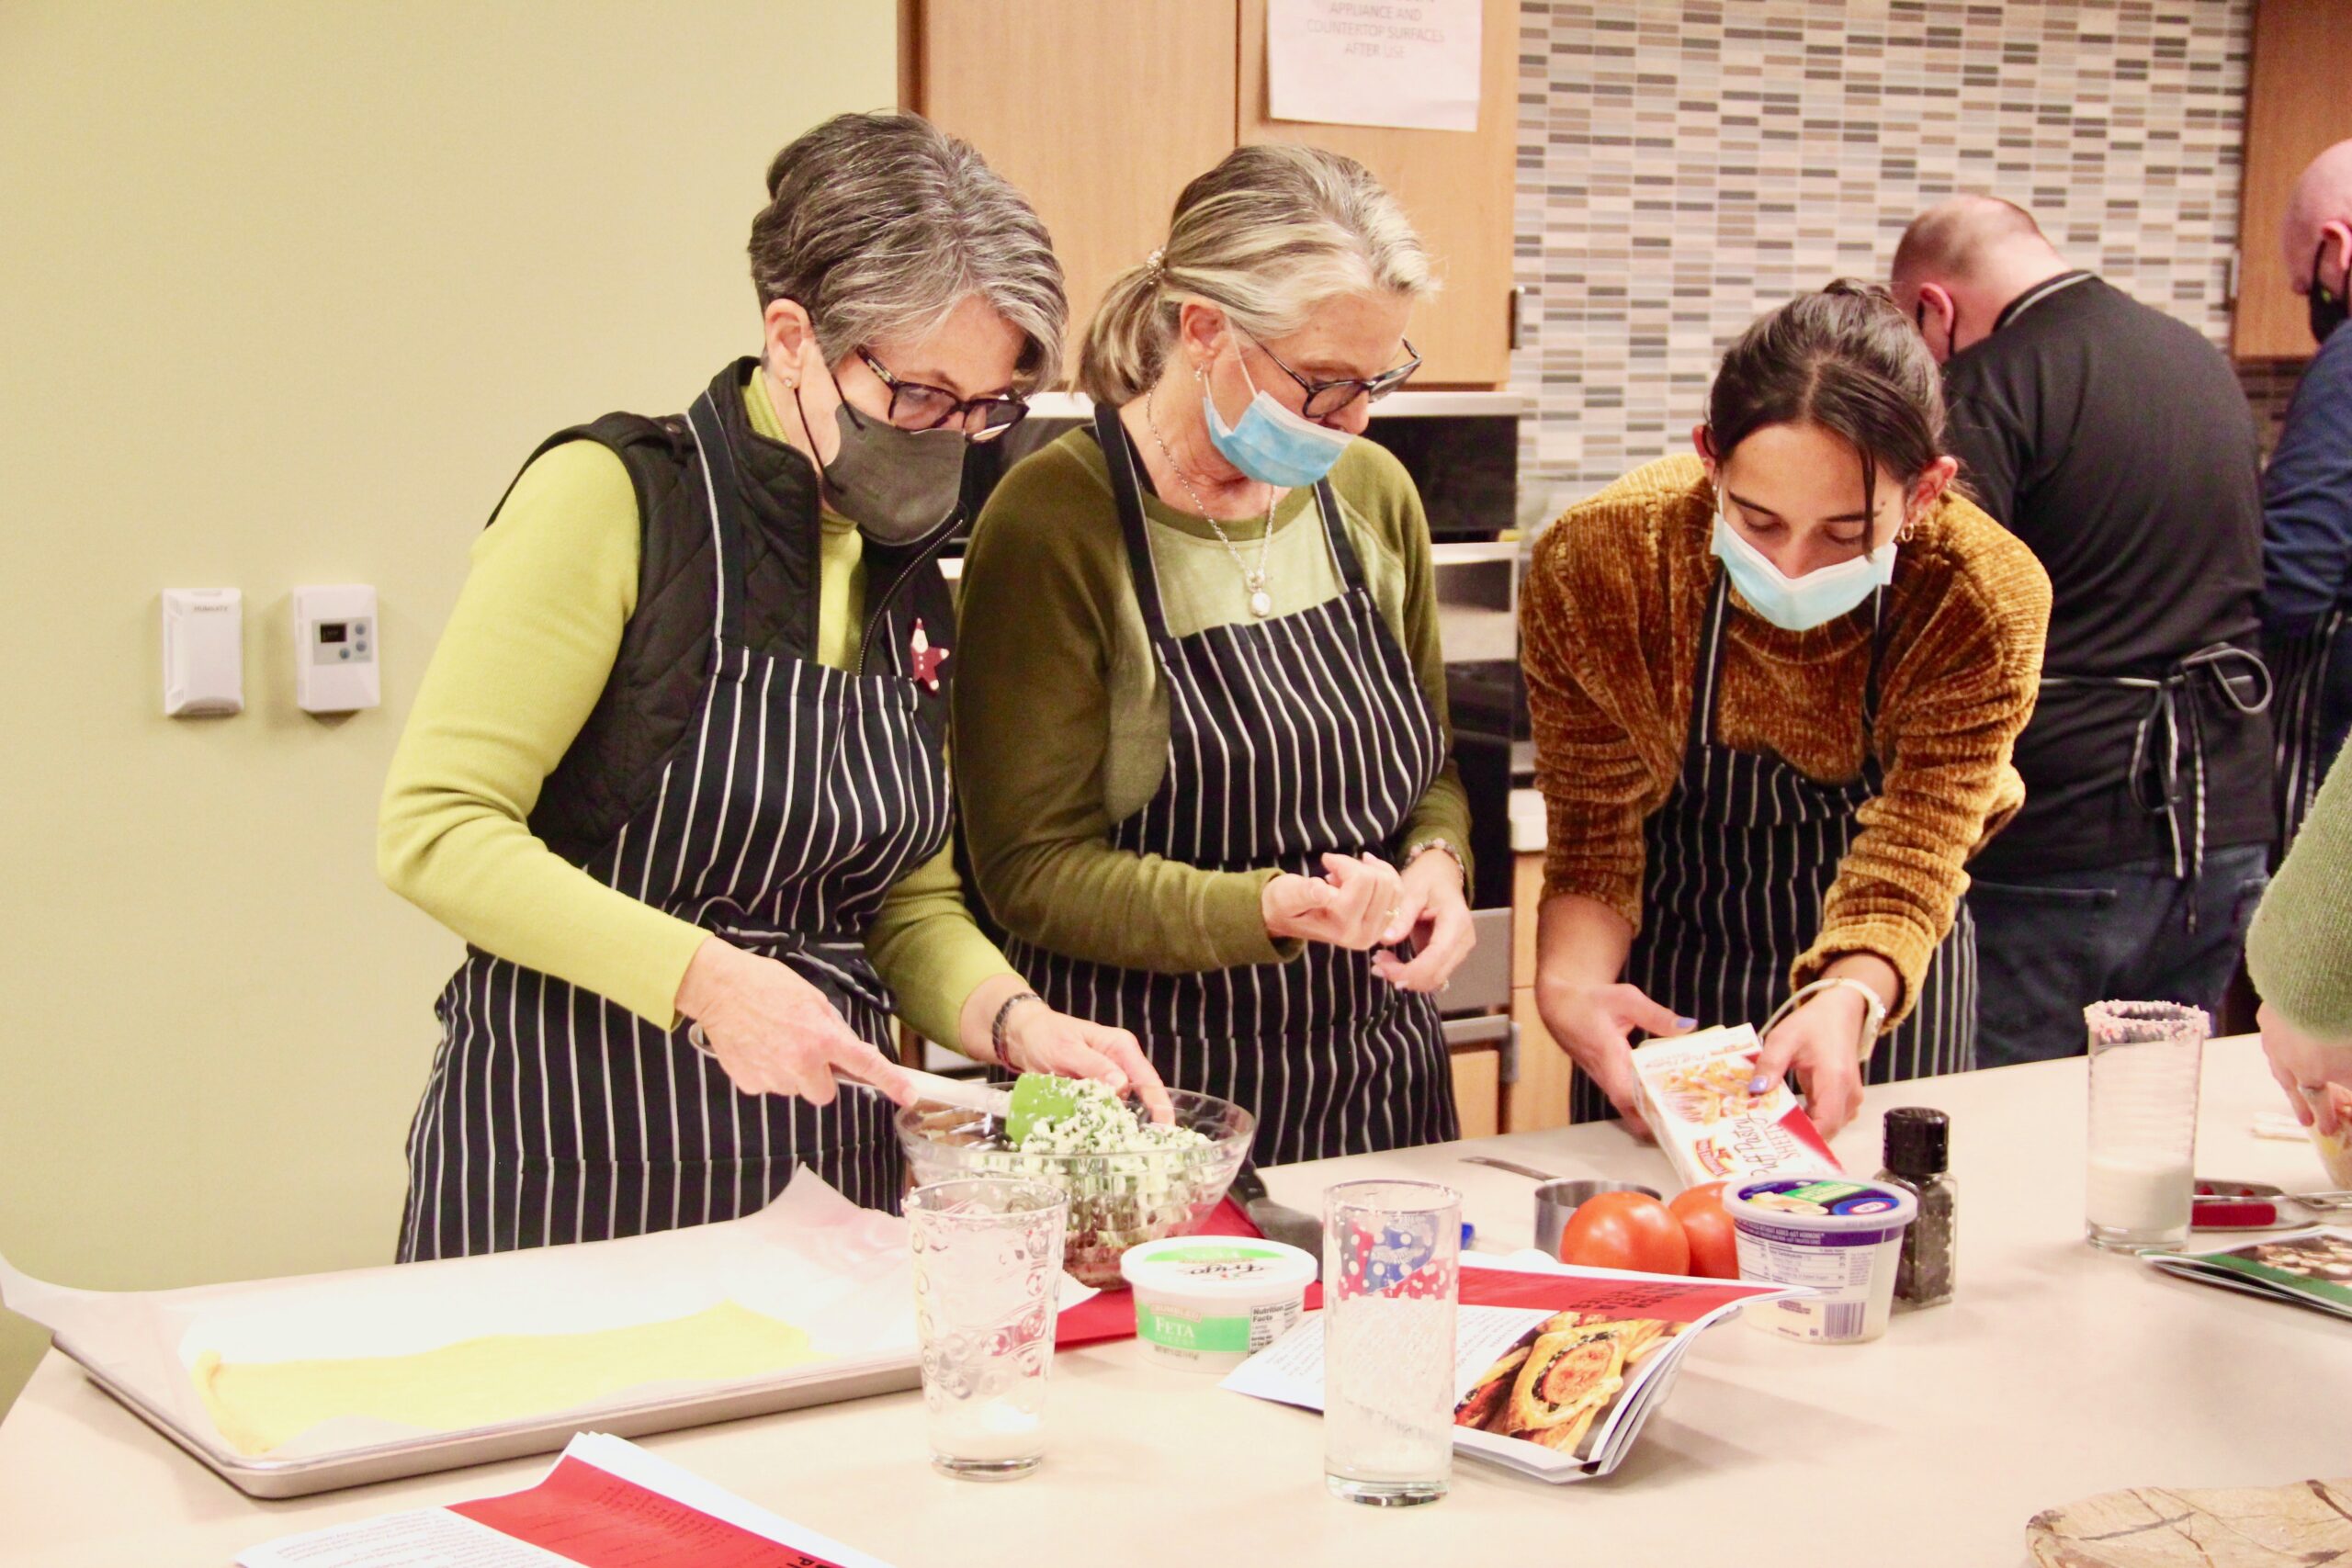 Aguie Fainguersch, right, helps participants during a cooking demonstration